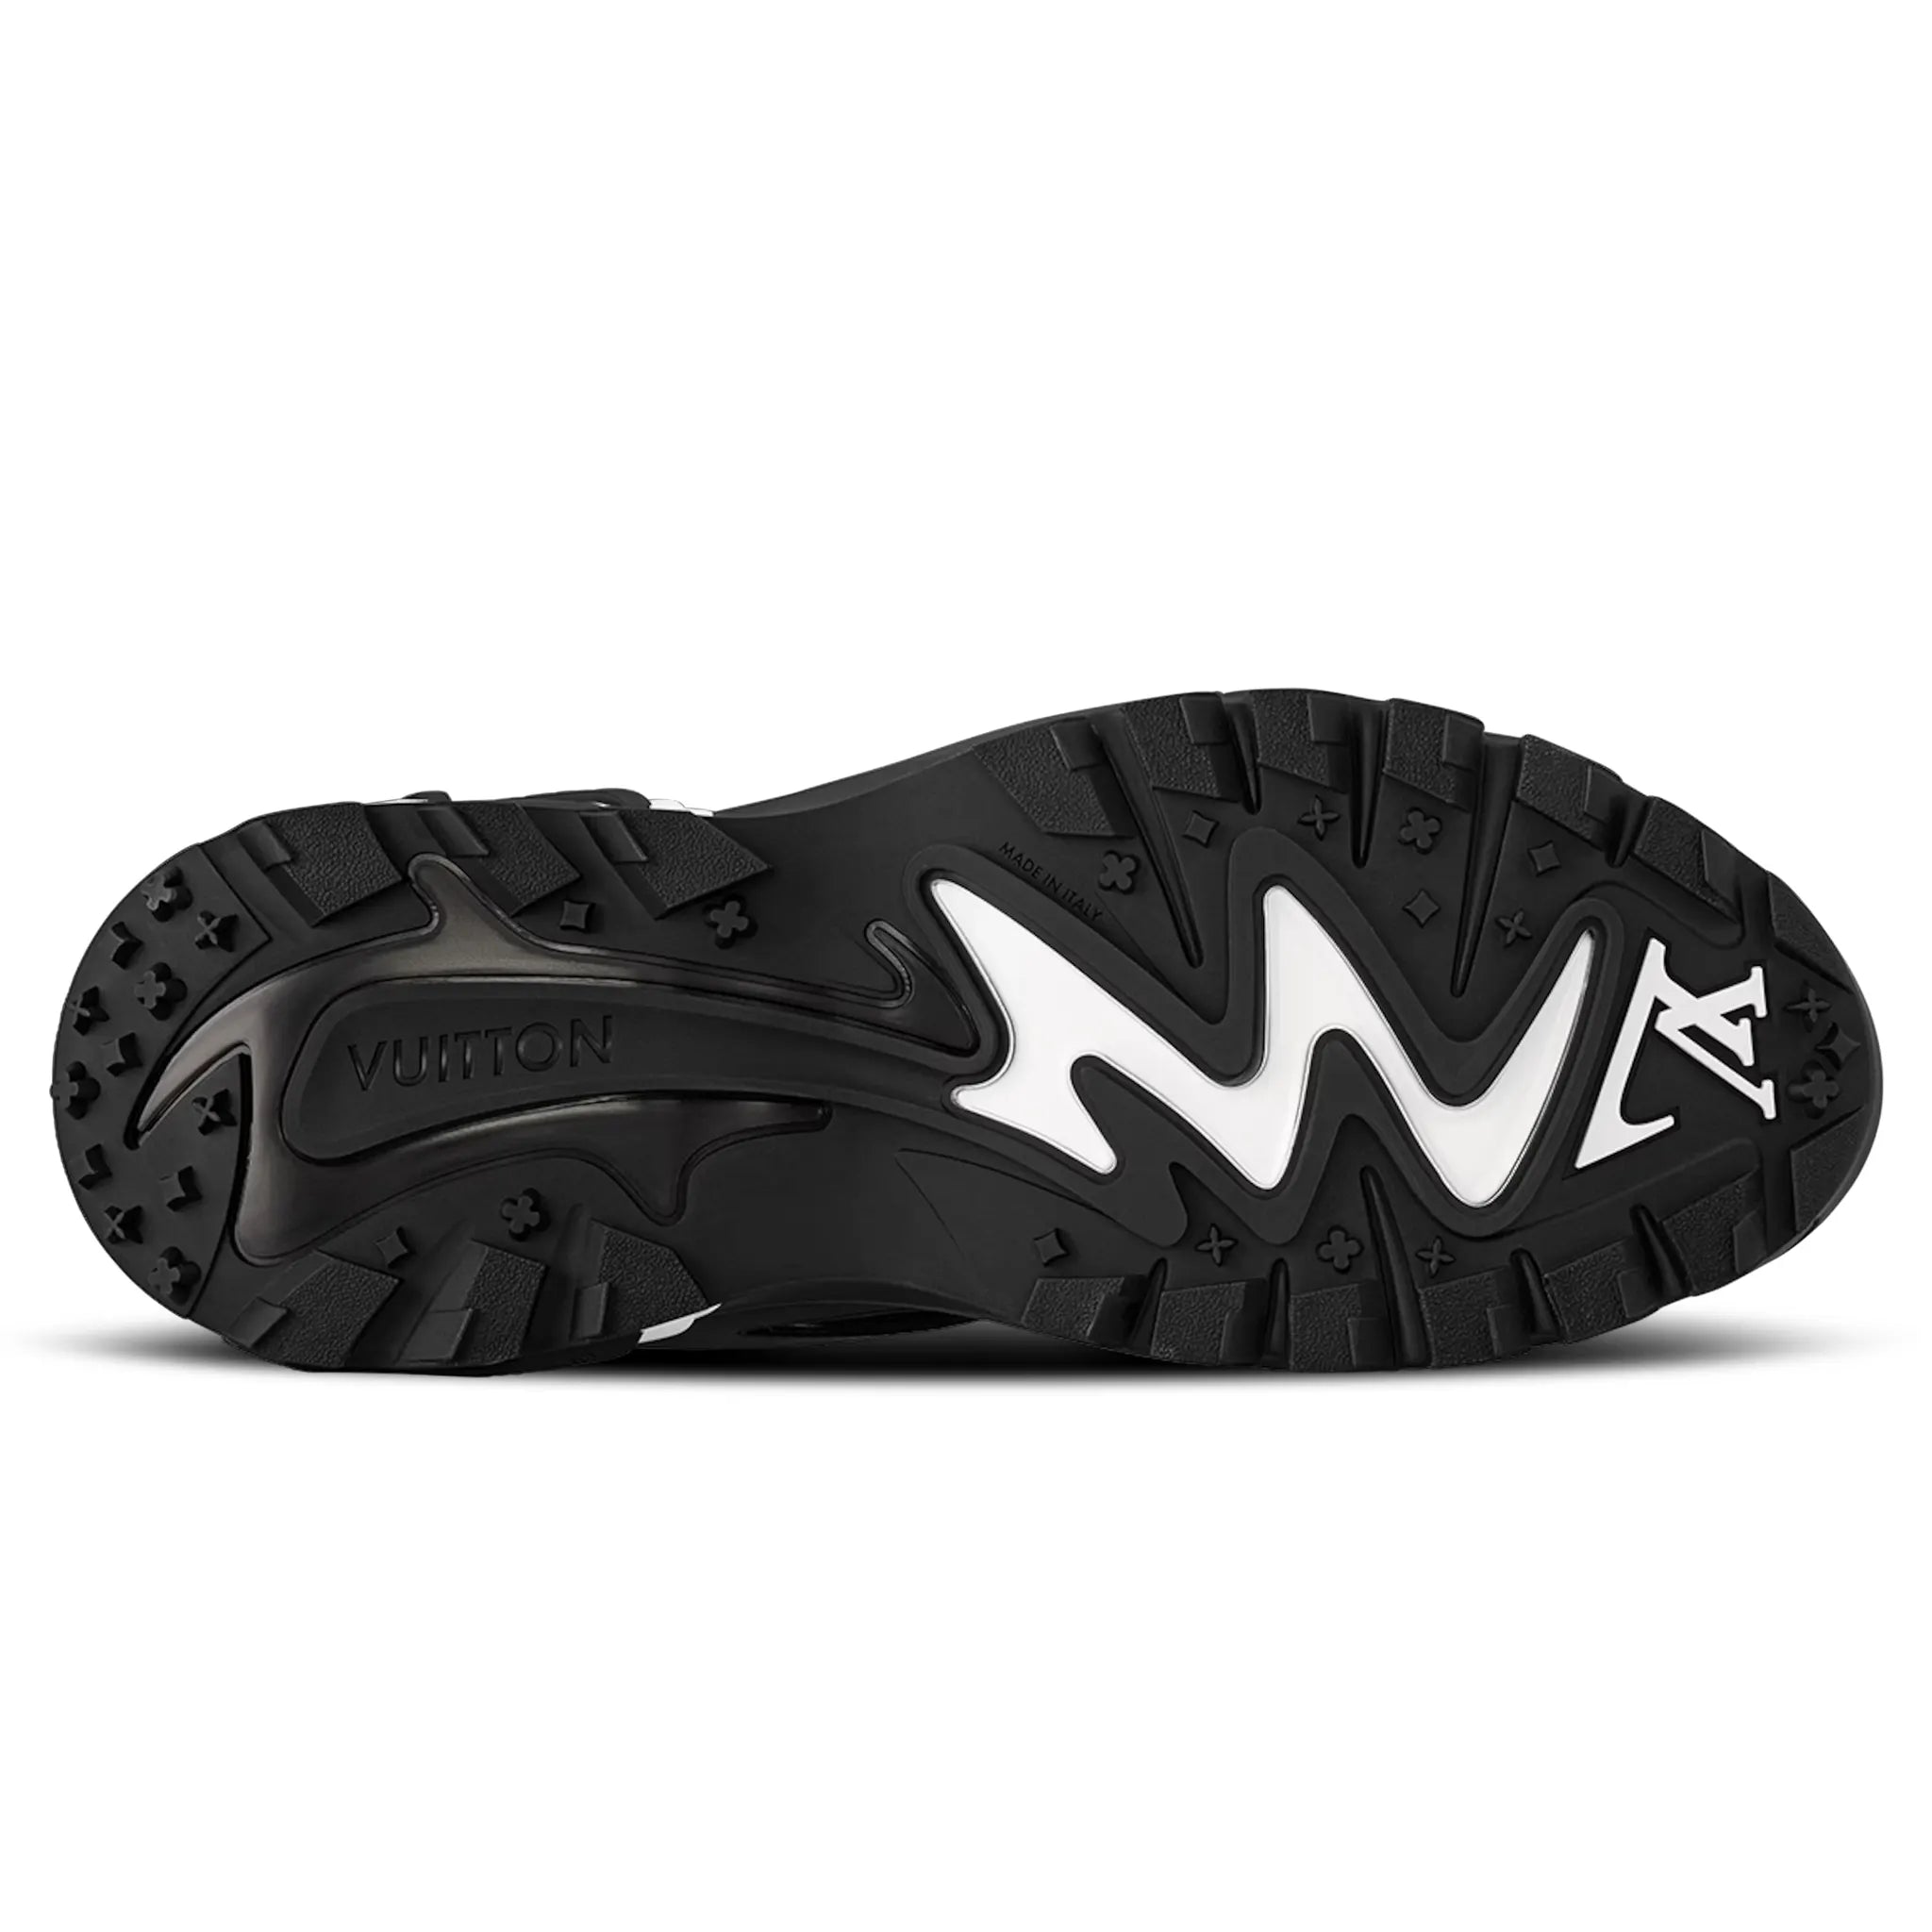 Sole view of Louis Vuitton LV Runner Tatic Black Sneaker 1ACG81